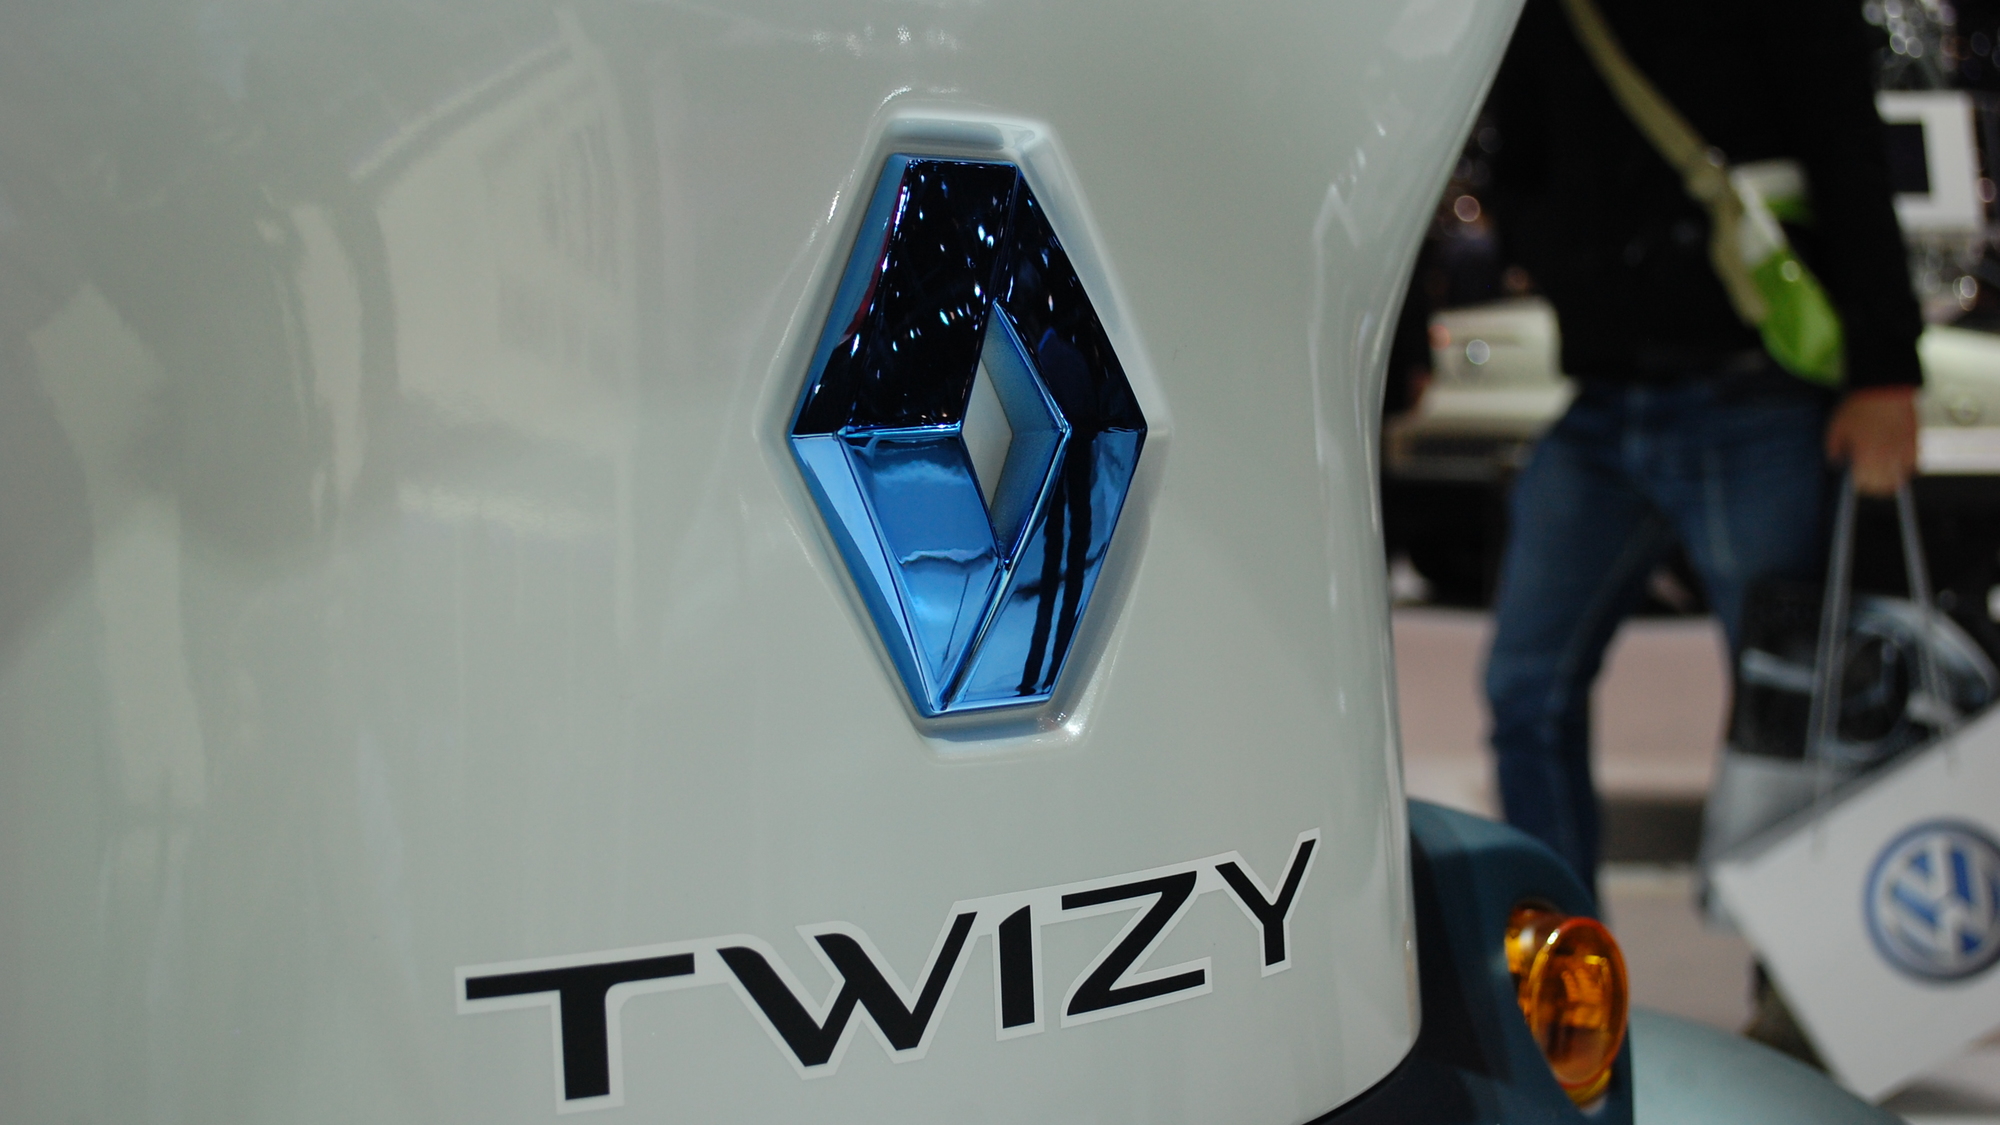 Renault Twizy Z.E. electric vehicle